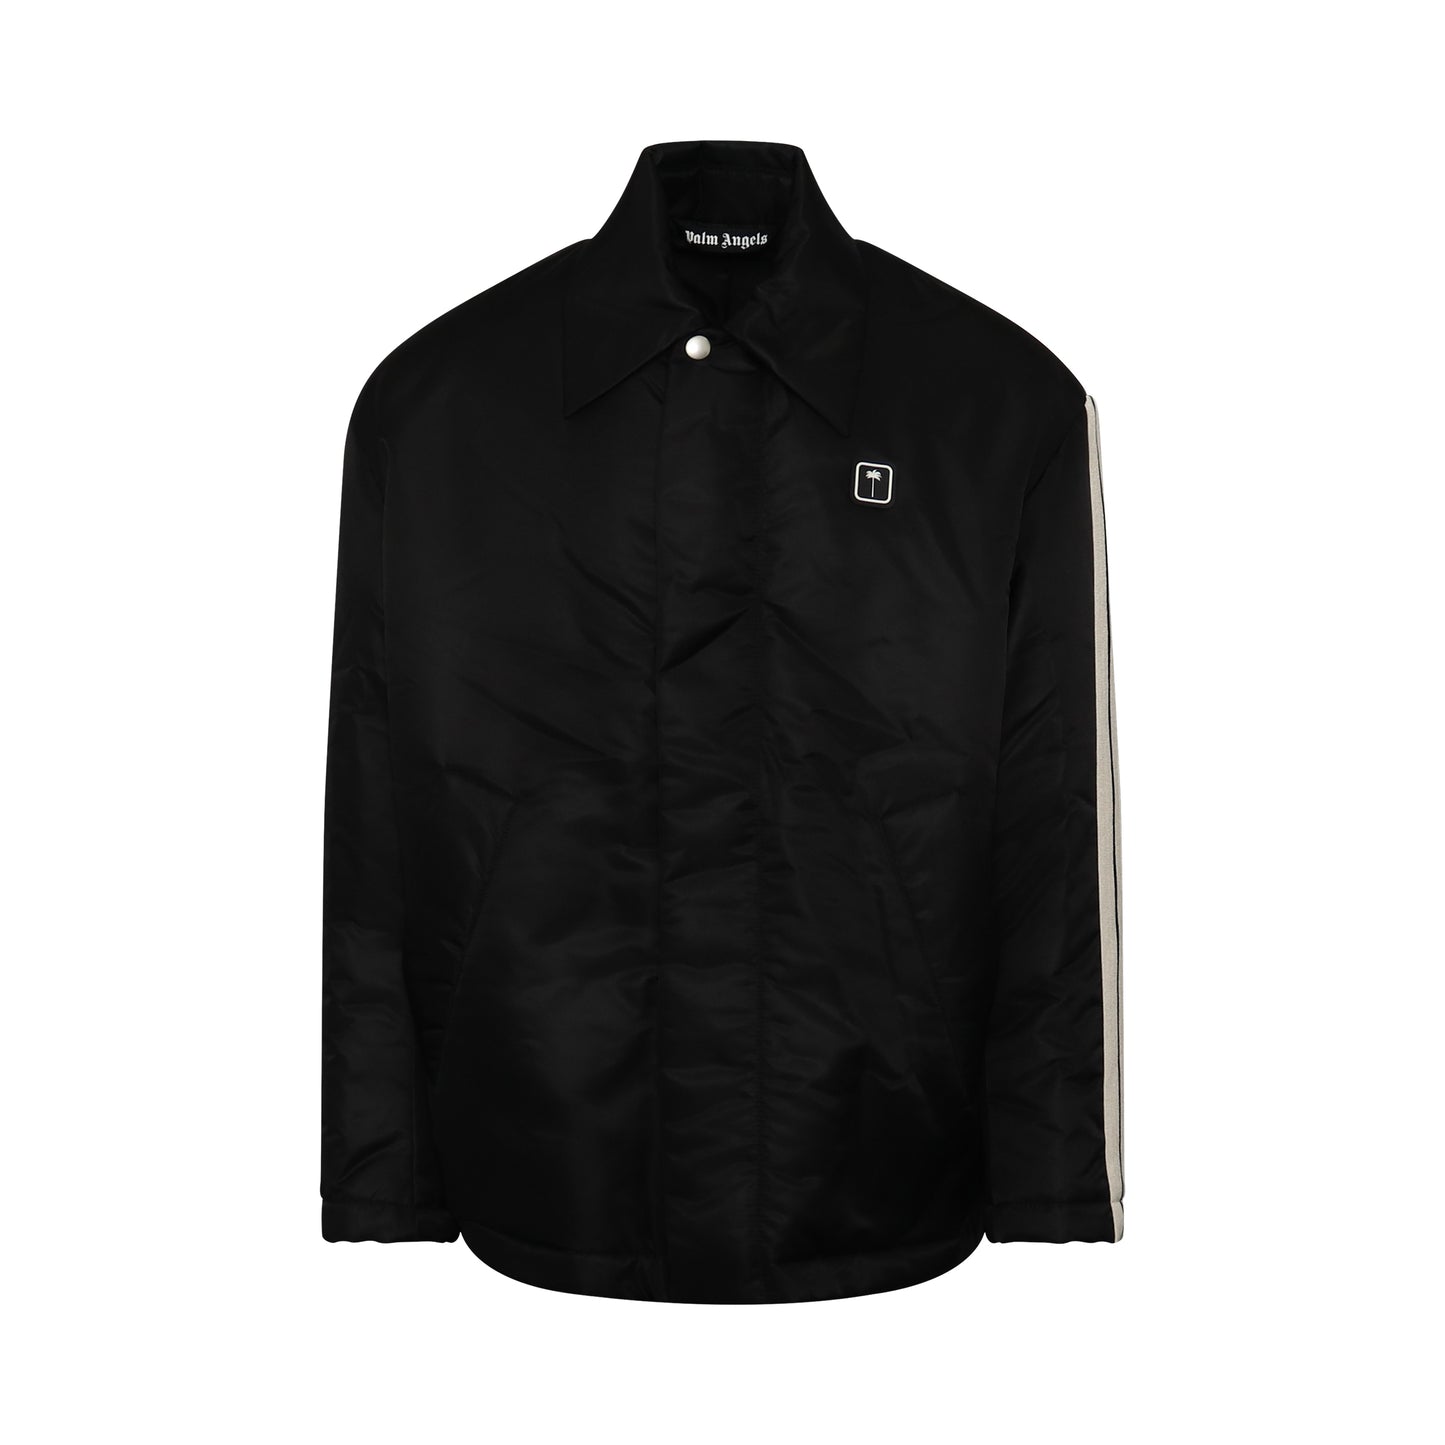 Pxp Puffer Jacket in Black